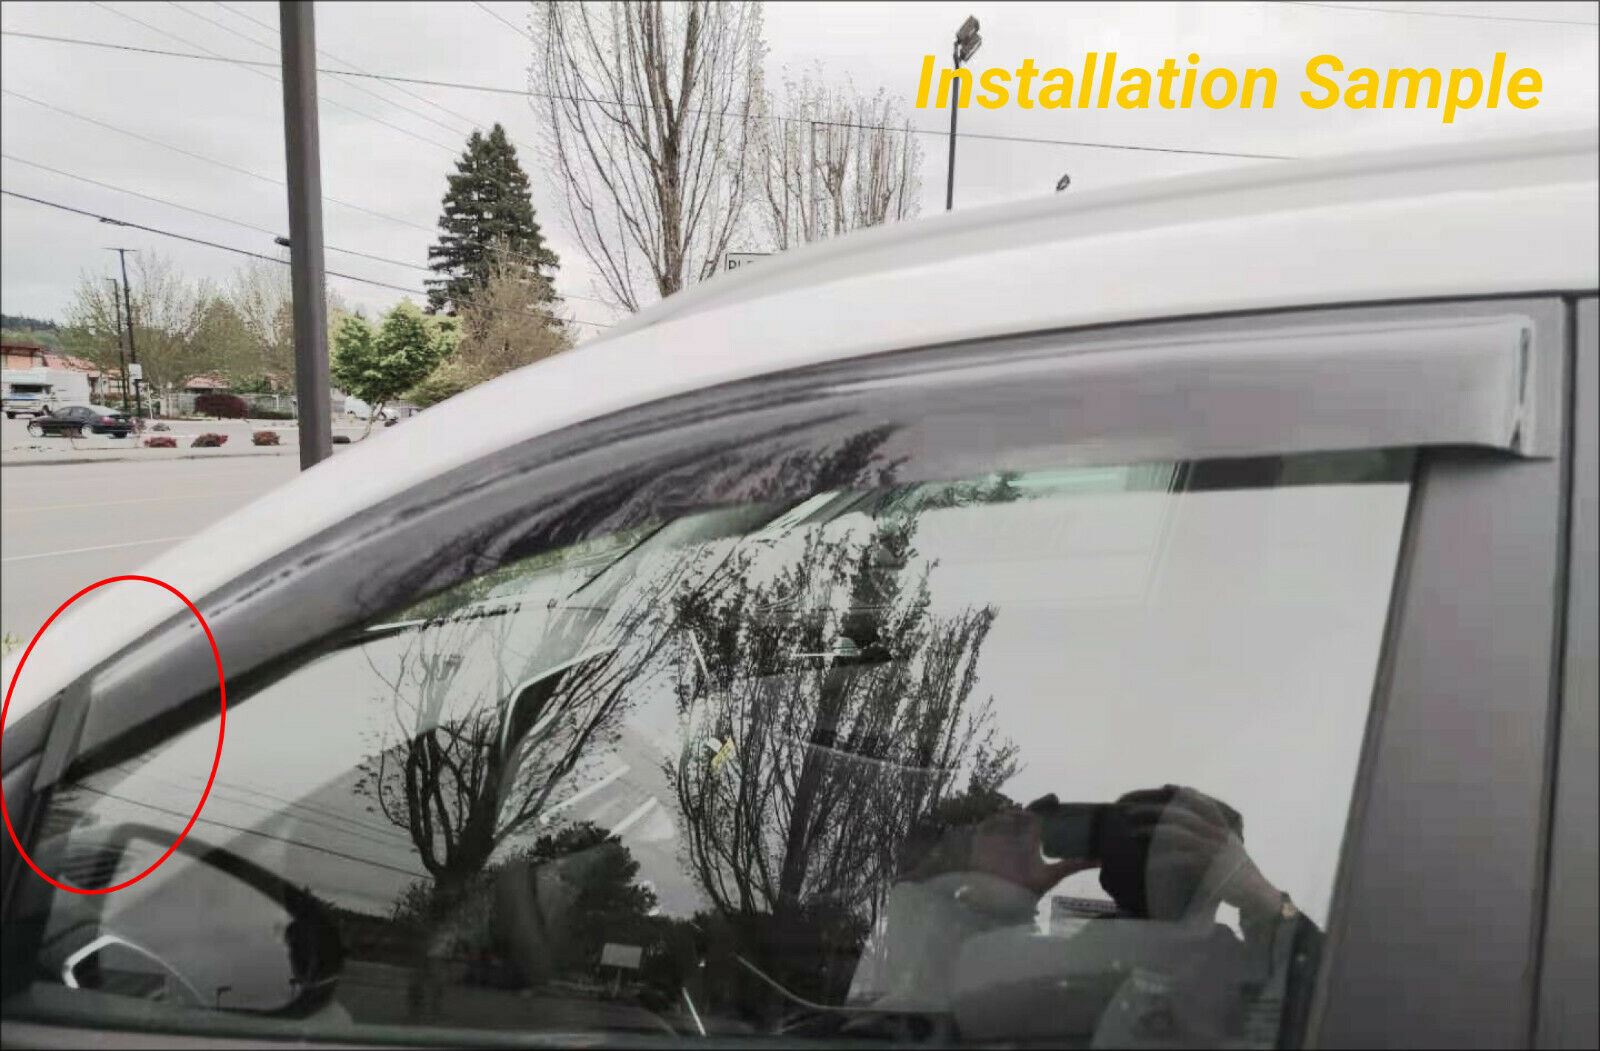 Ajuste 2019-2021 Hyundai Tucson Clip-On Chrome Trim Vent Window Viseras Rain Sun Wind Guards Shade Deflectors